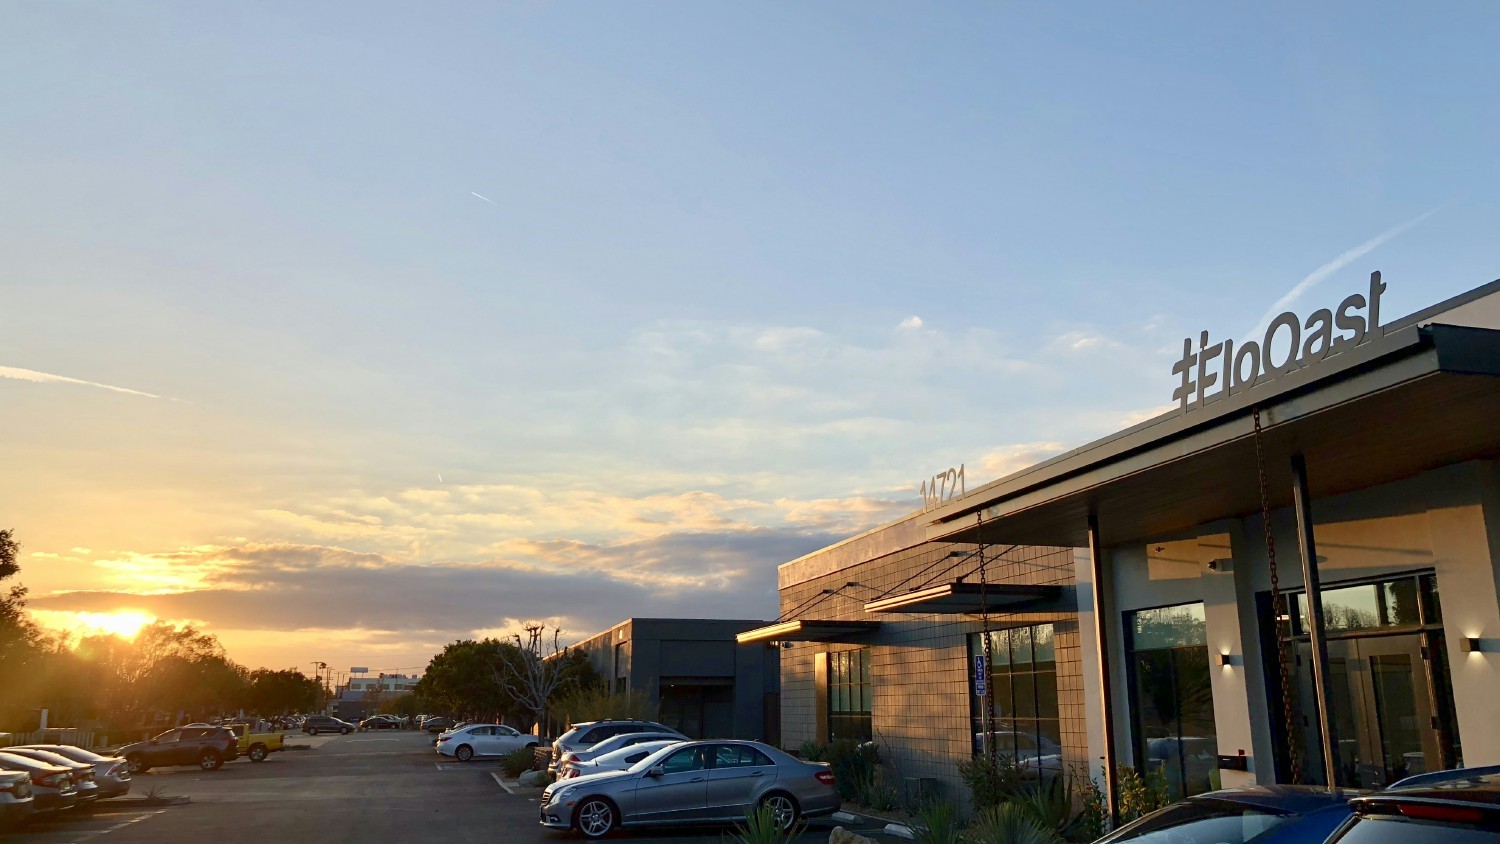 FloQast headquarters at sunset.